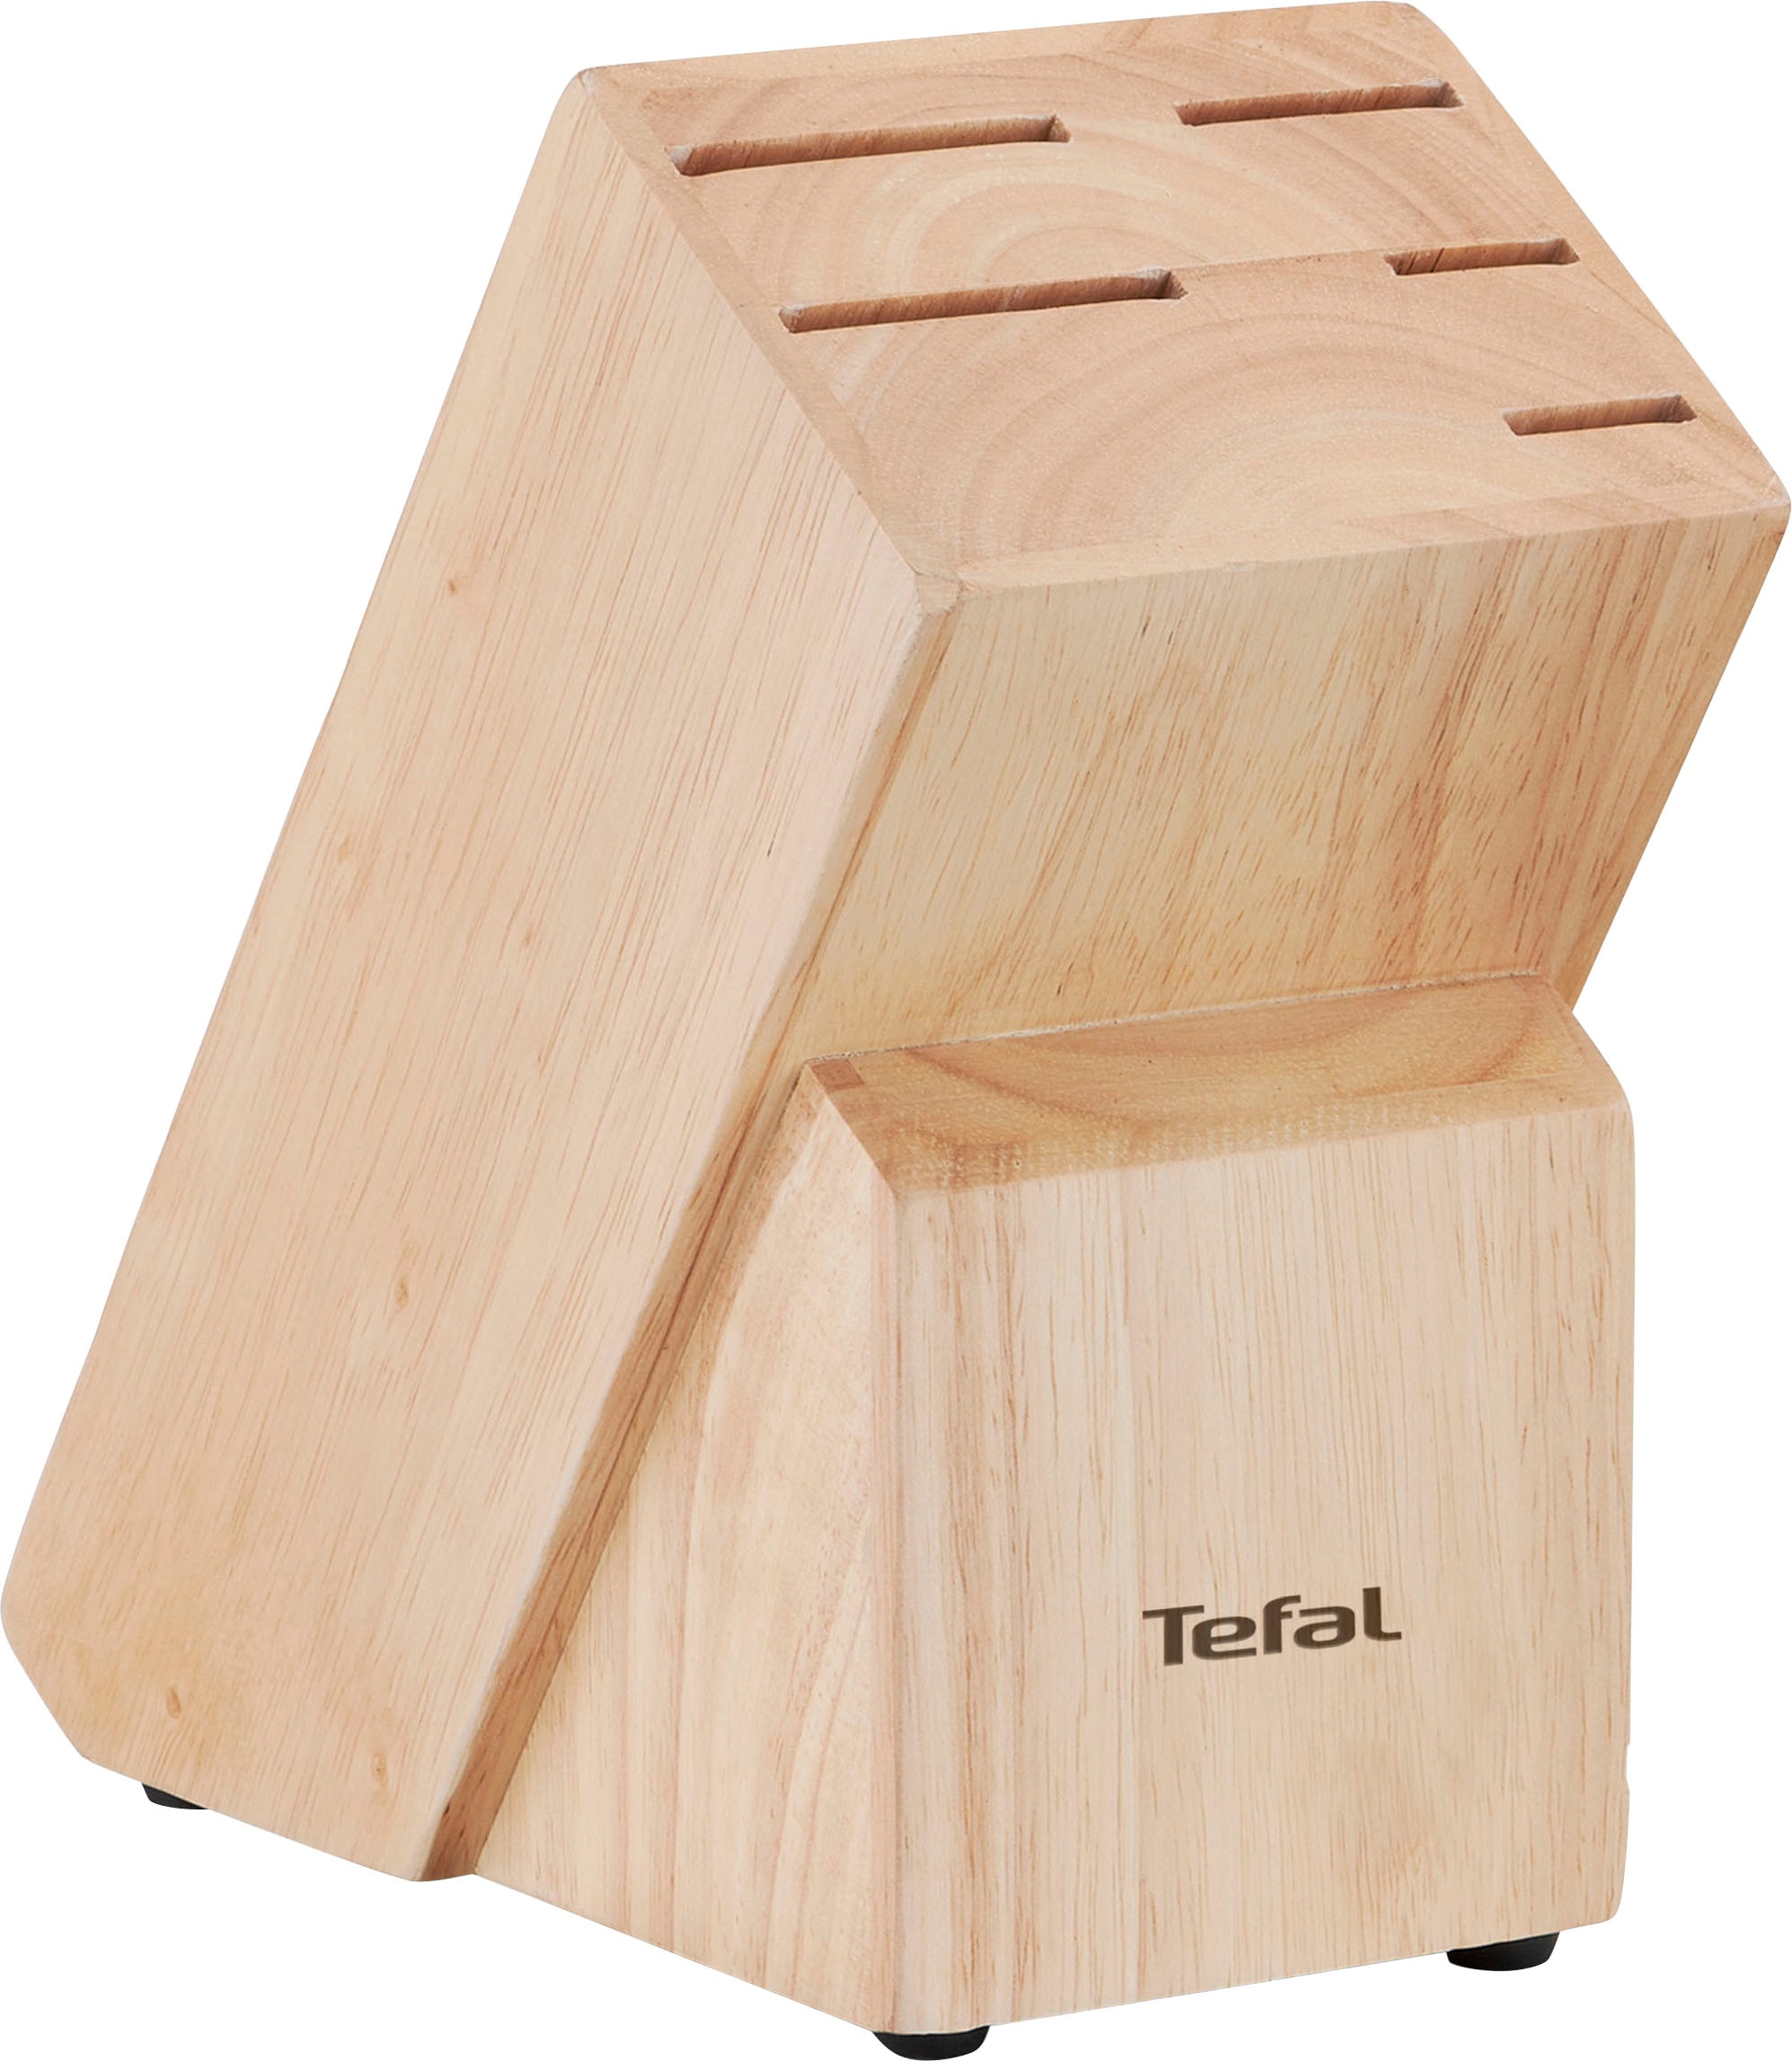 Tefal Messerblock »Ice Force«, 6 tlg., Eishärtung, dauerhafte Leistungsstärke, formschön, Edelstahl/Holz